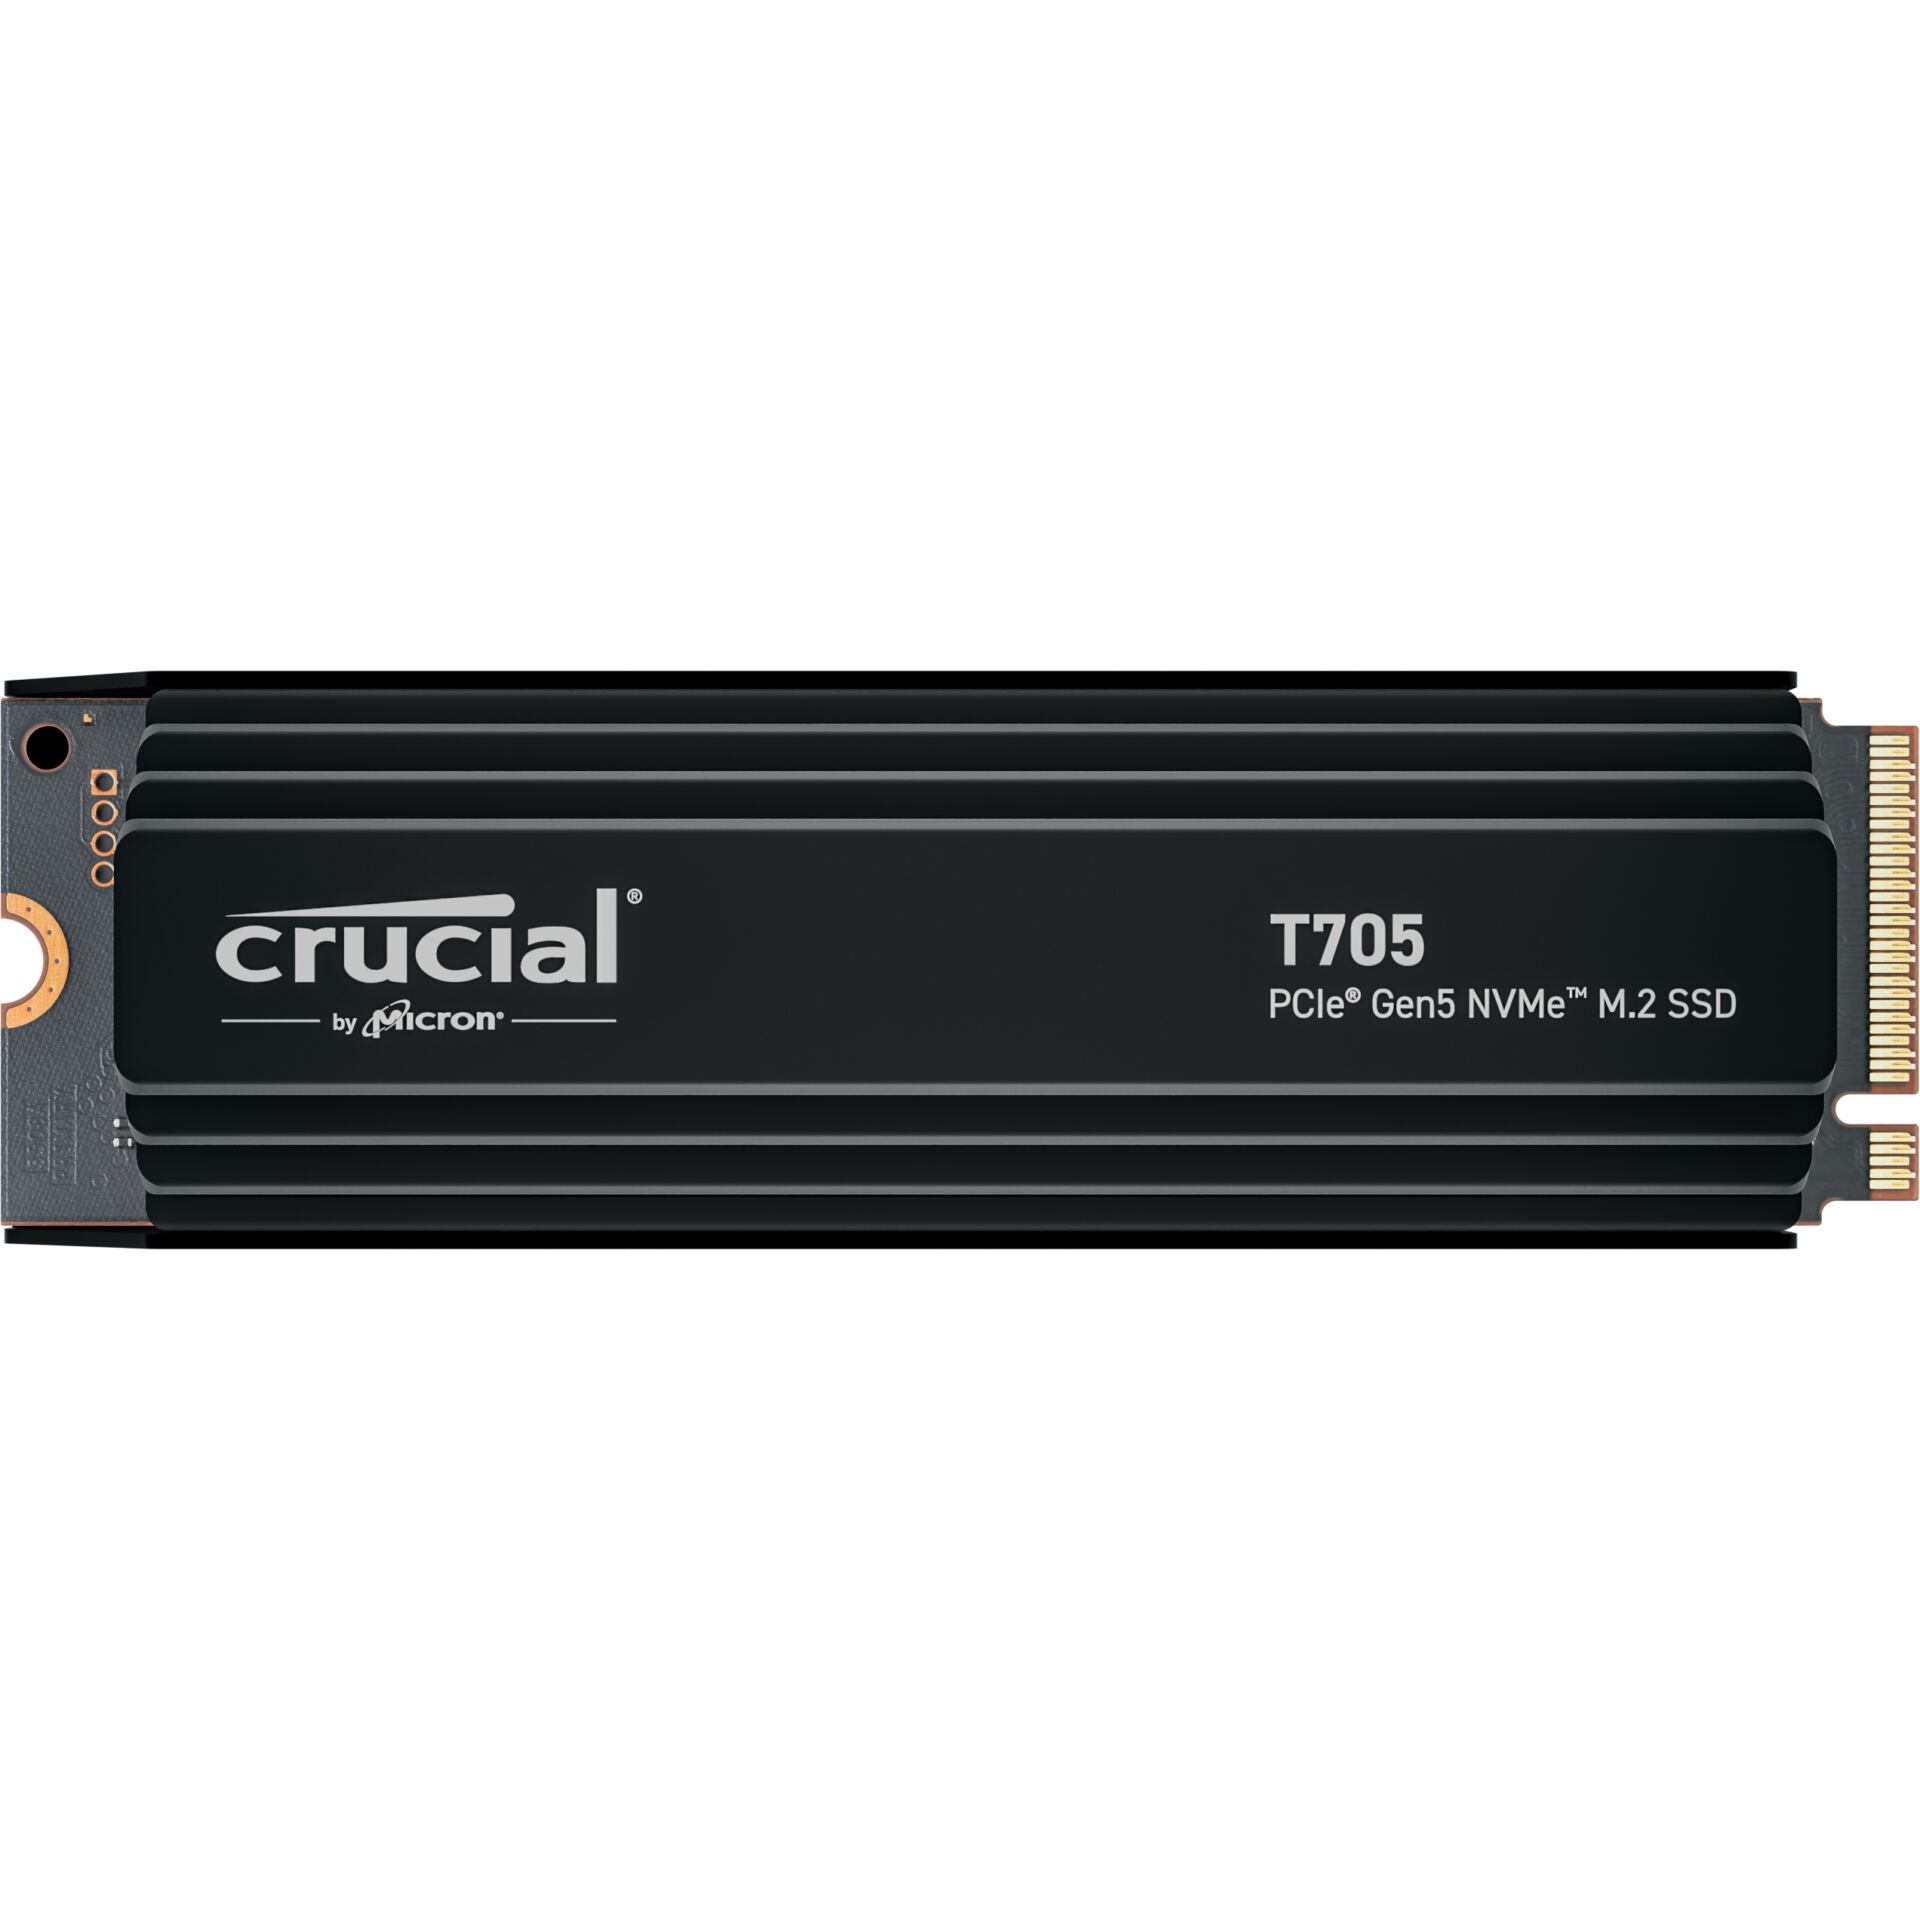 Crucial T705 with heatsink   2TB PCIe Gen5 NVMe M.2 SSD